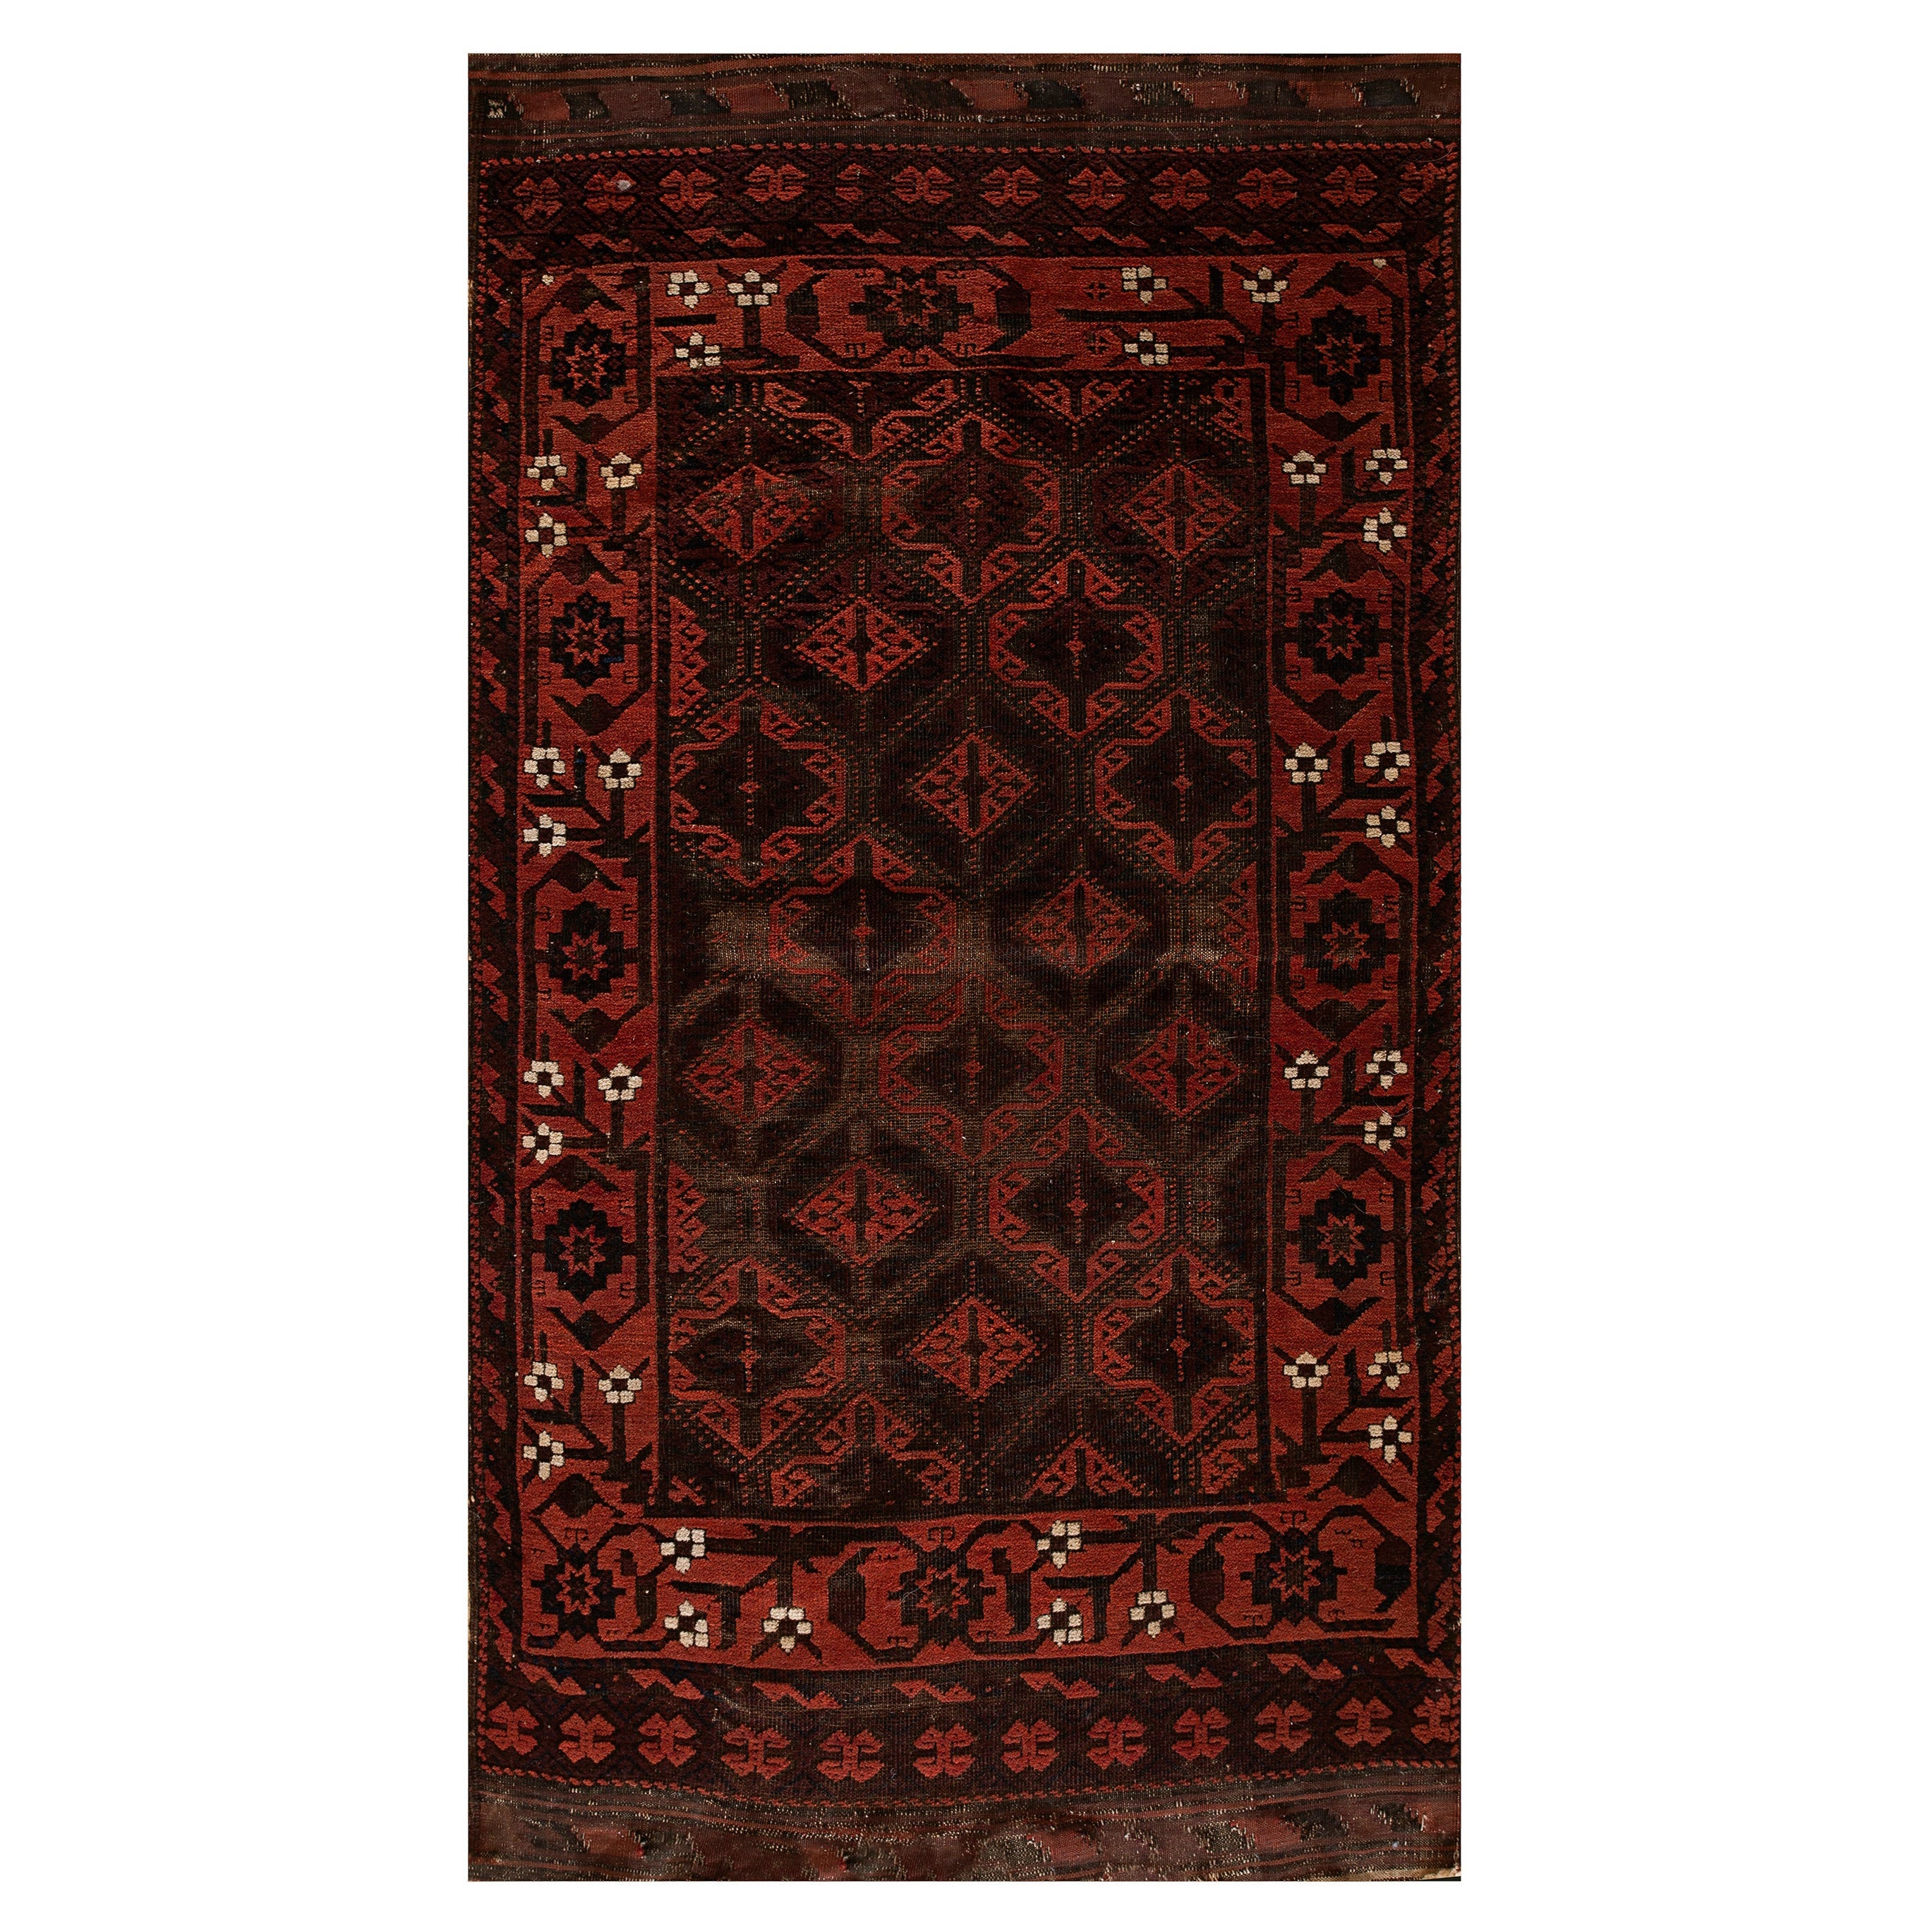 Late 19th Century Persian Baluch Carpet ( 2'8" x 5'2" - 82 x 157 cm )